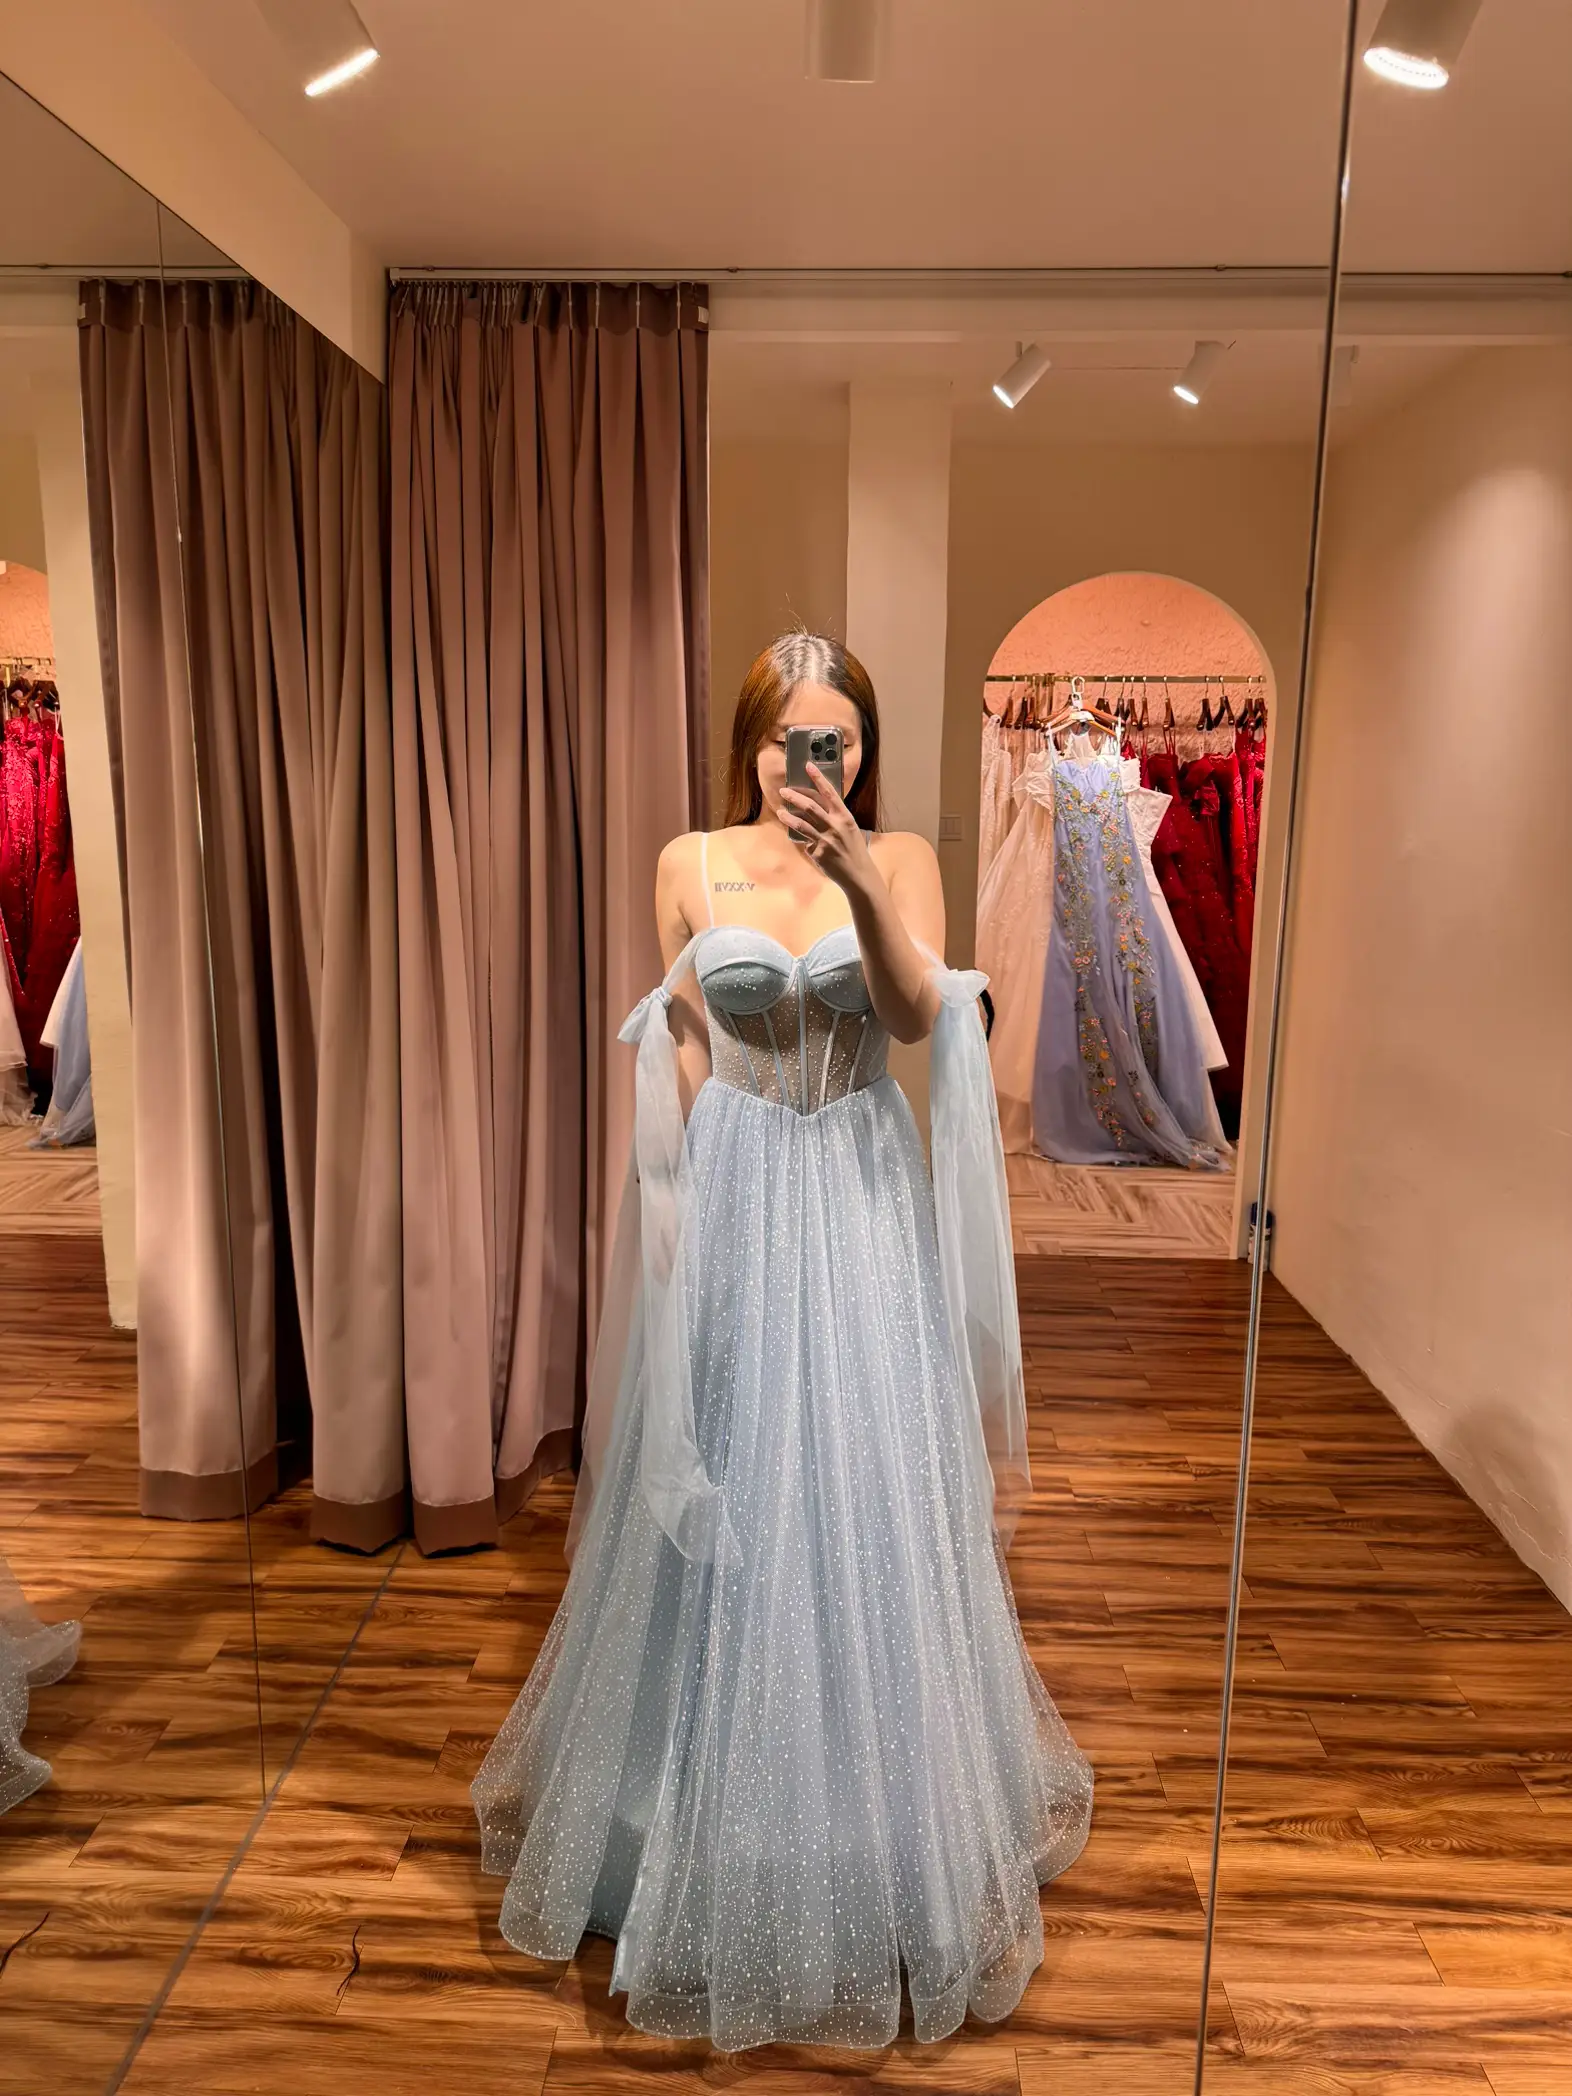 The Leona Lace Corset Back Wedding Dress – Broke Bride Dresses